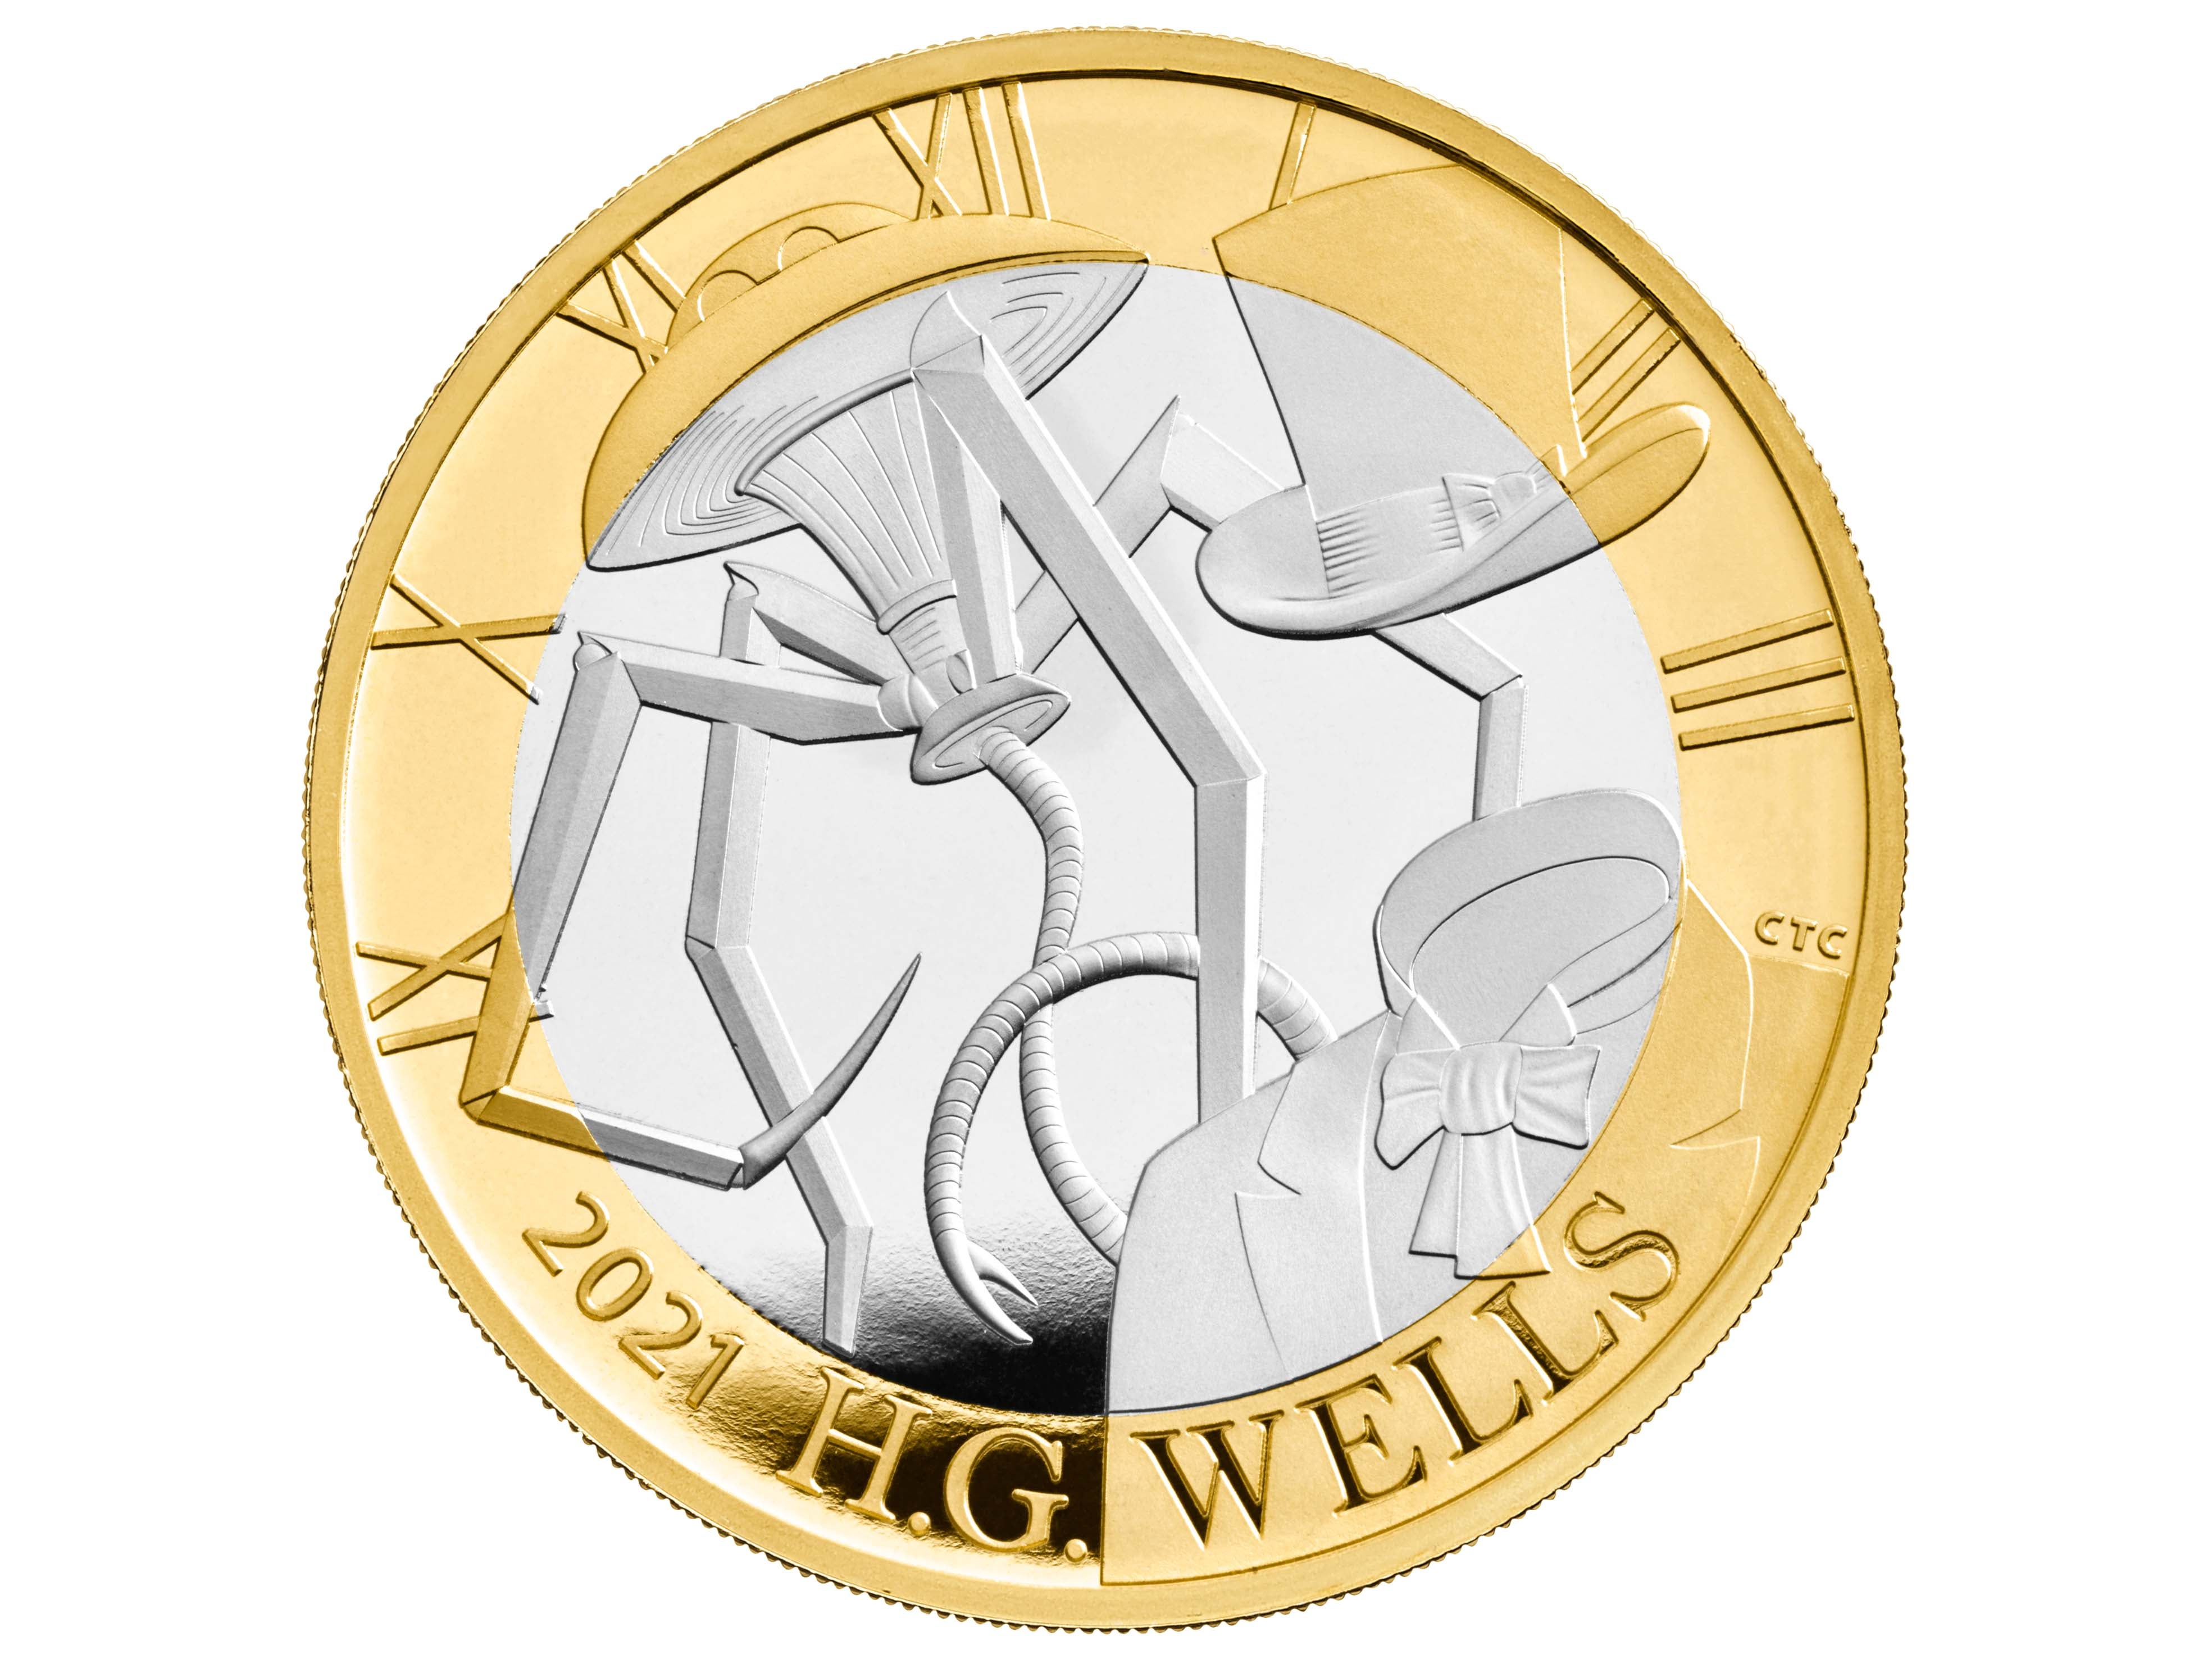 The new commemorative coin